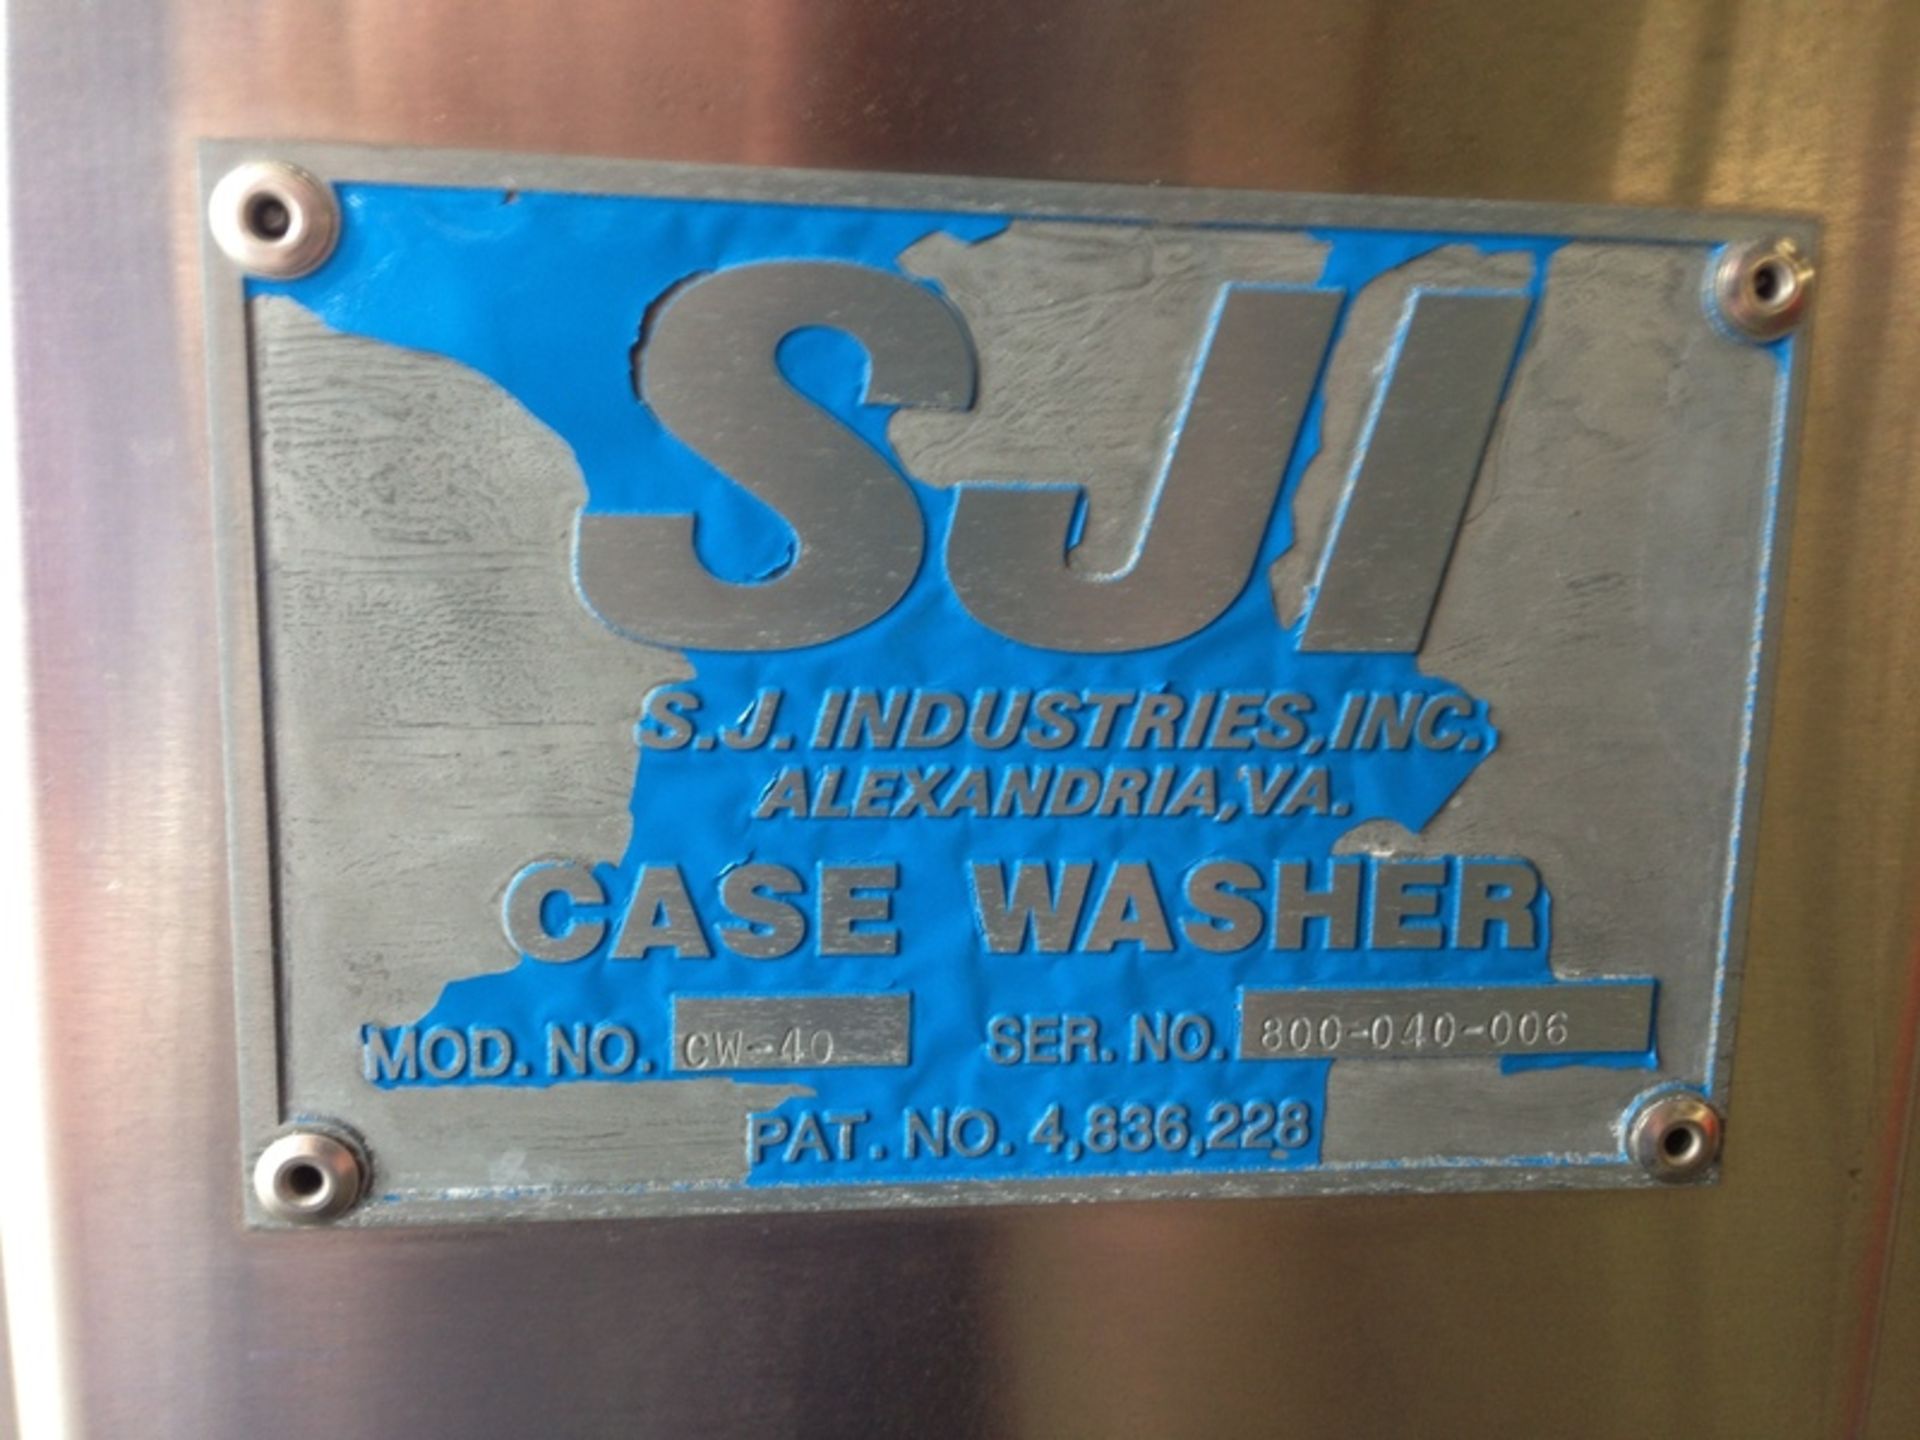 SJI Case Washer, Model CW-40, S/N: 800-040-006, Blower motors: 75Hp, 460V, 60Hz, 3Ph, Dims: 26' L - Image 4 of 5